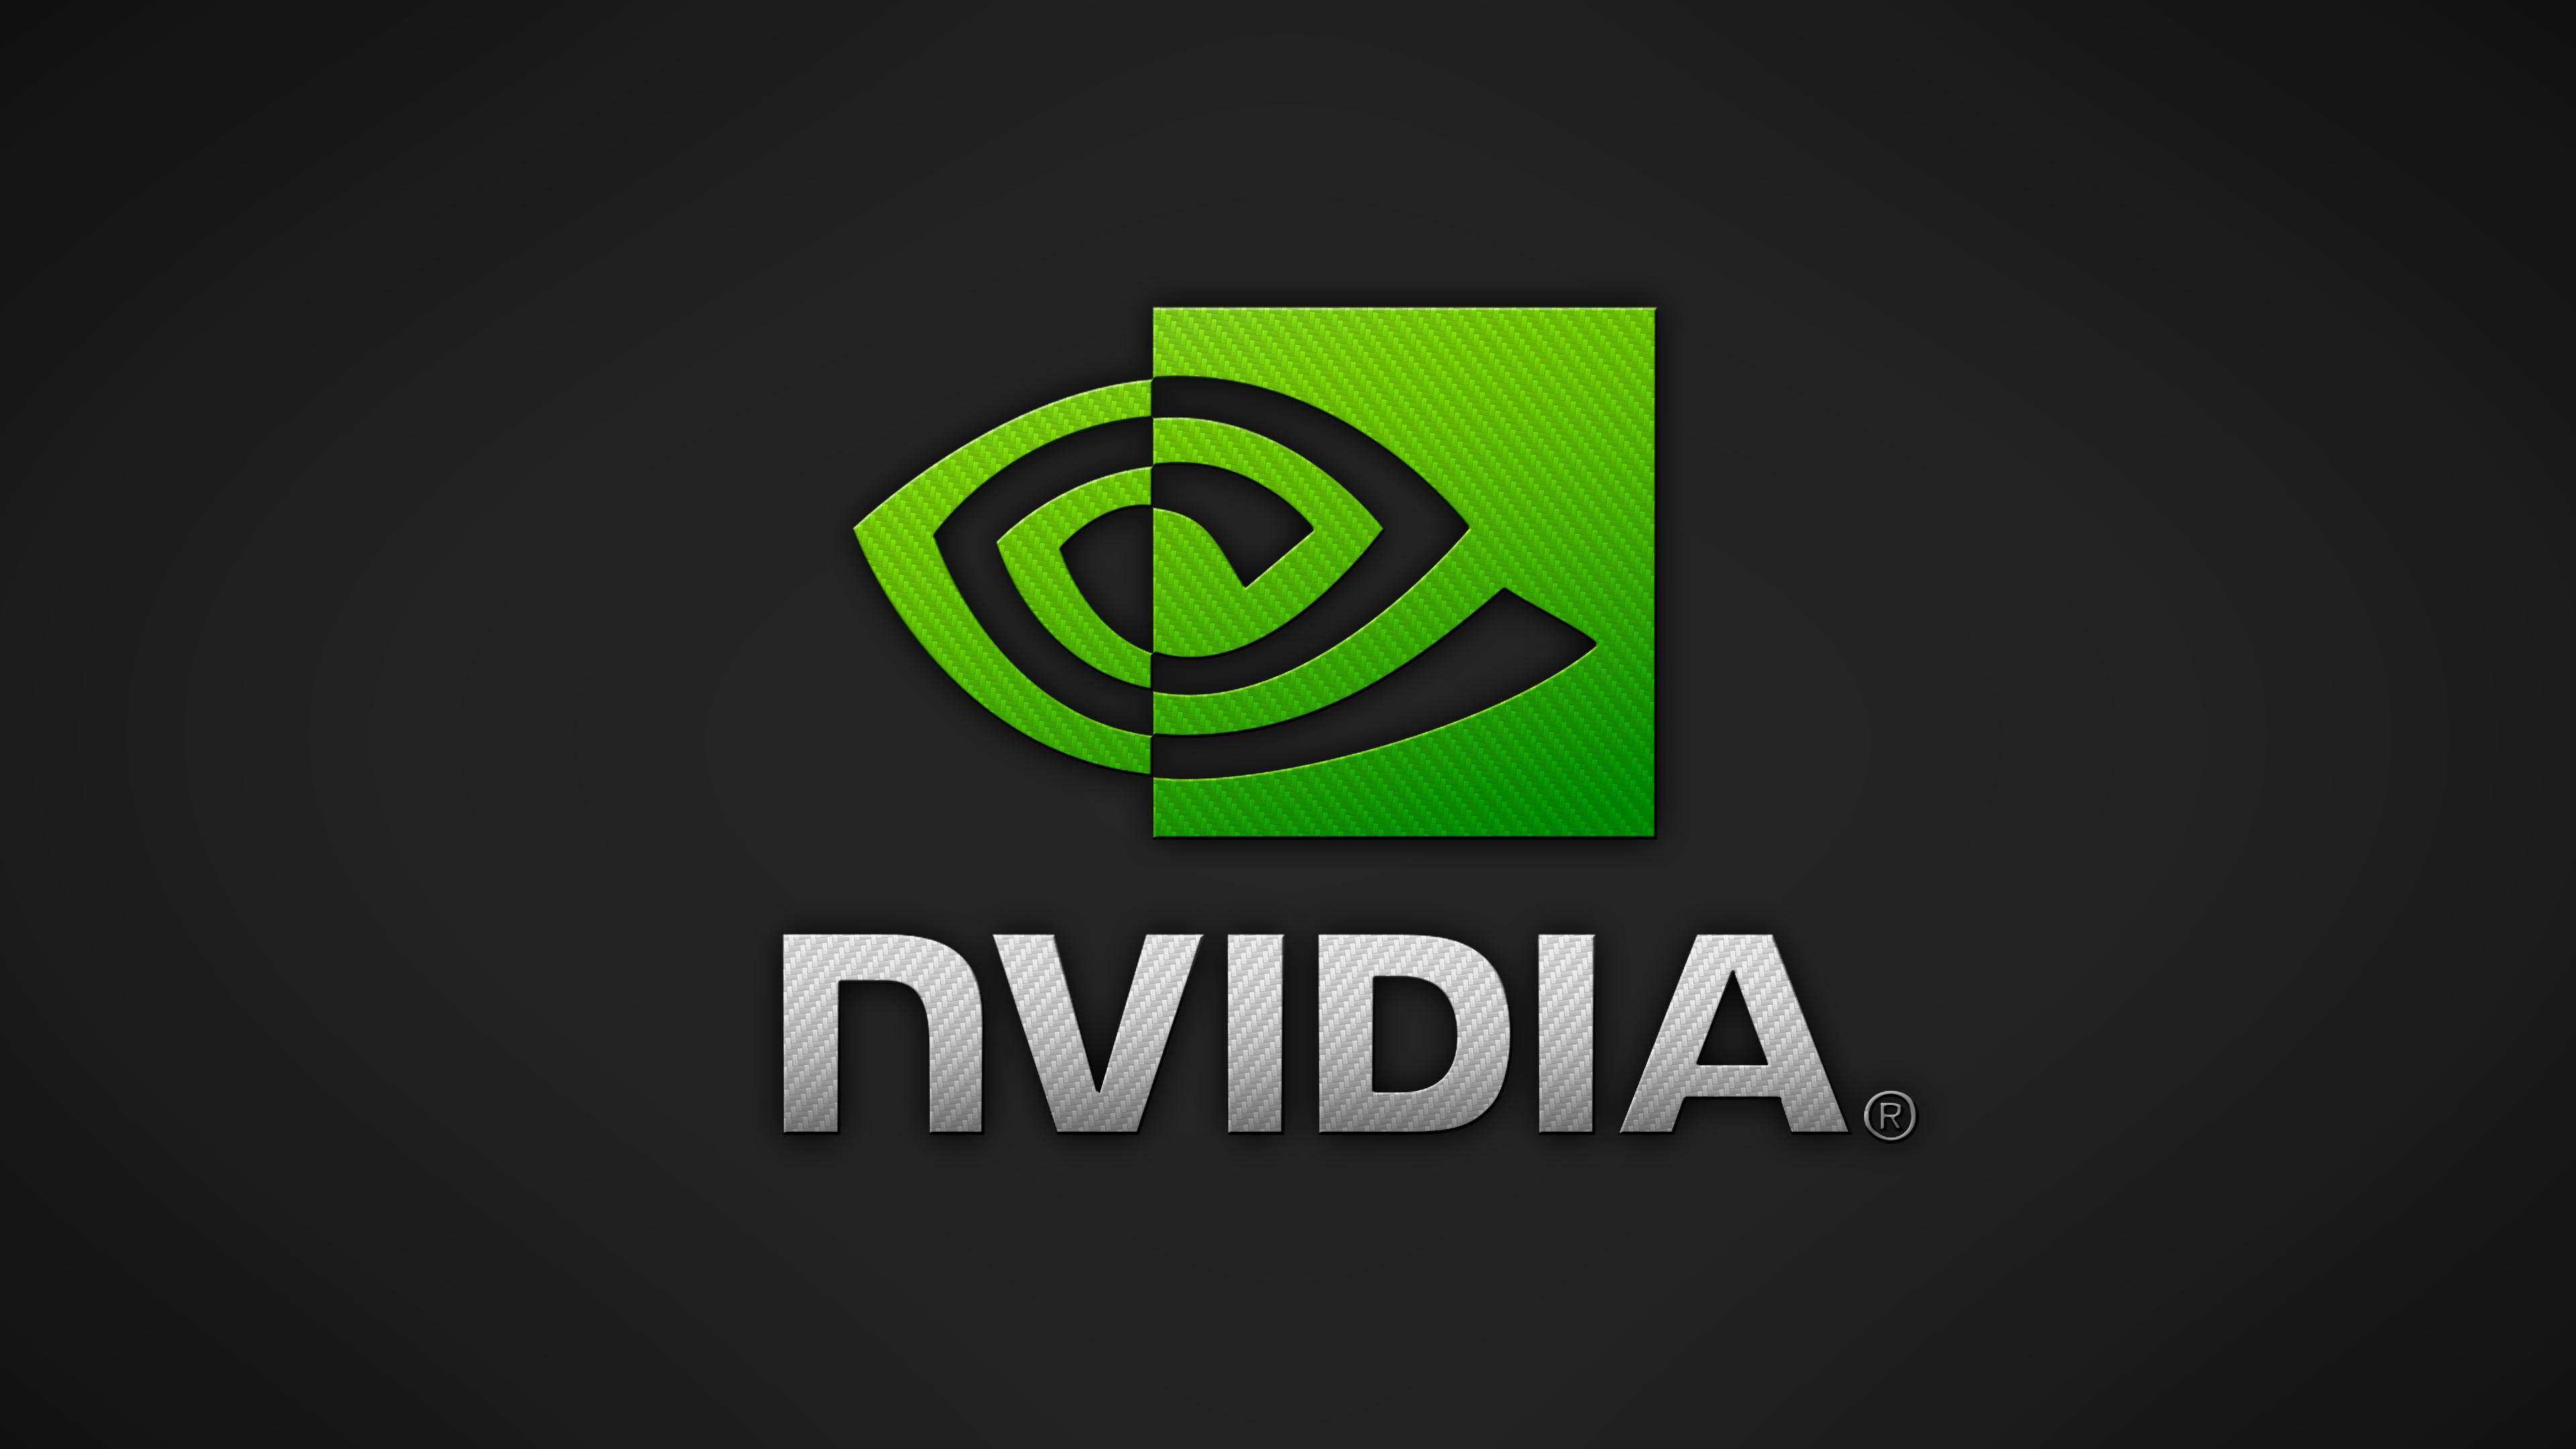 Qiapt - Nvidia Logo Full Hd - HD Wallpaper 